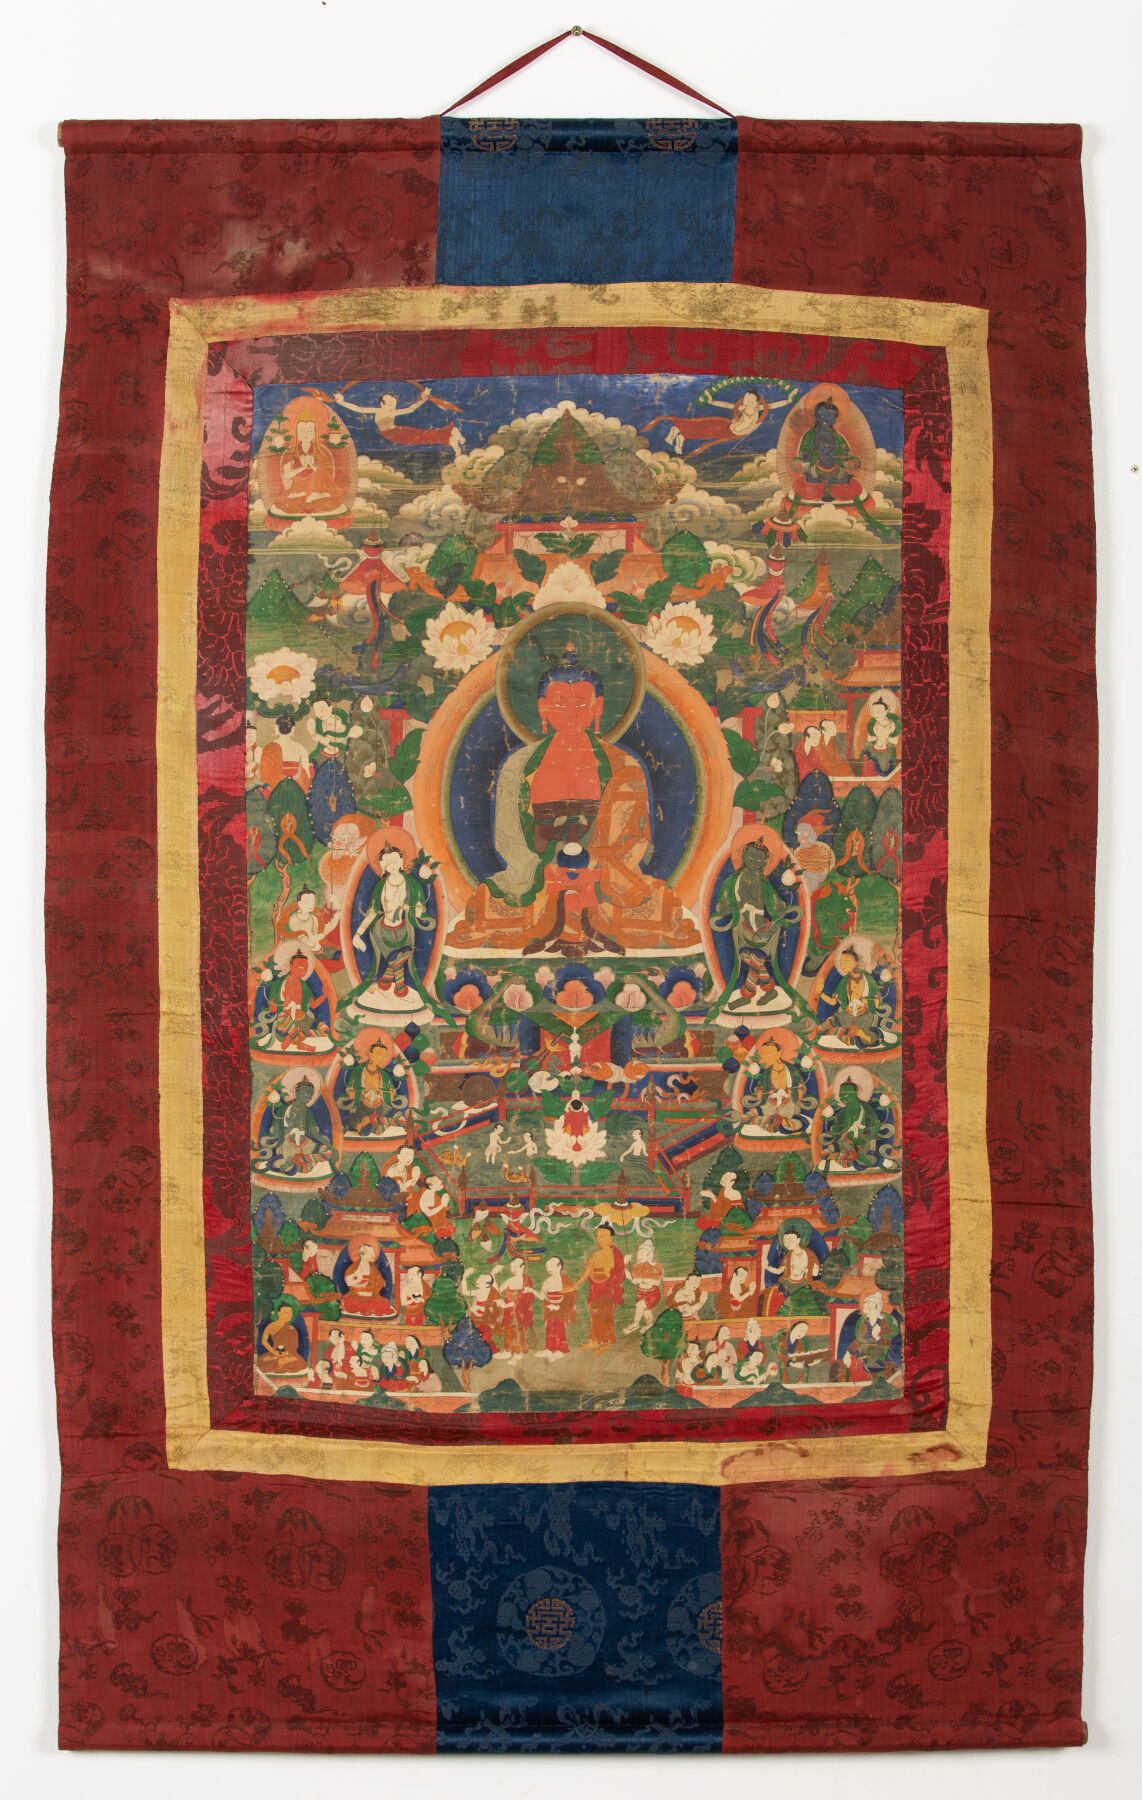 Null 提贝，19世纪。
唐卡，织物上的绘画，描绘了阿弥陀佛在其净土上的统治，两侧是两个站立的菩萨。 
他面对的是一个手持吉祥物的供桌，僧侣和行者在宫殿前的空&hellip;